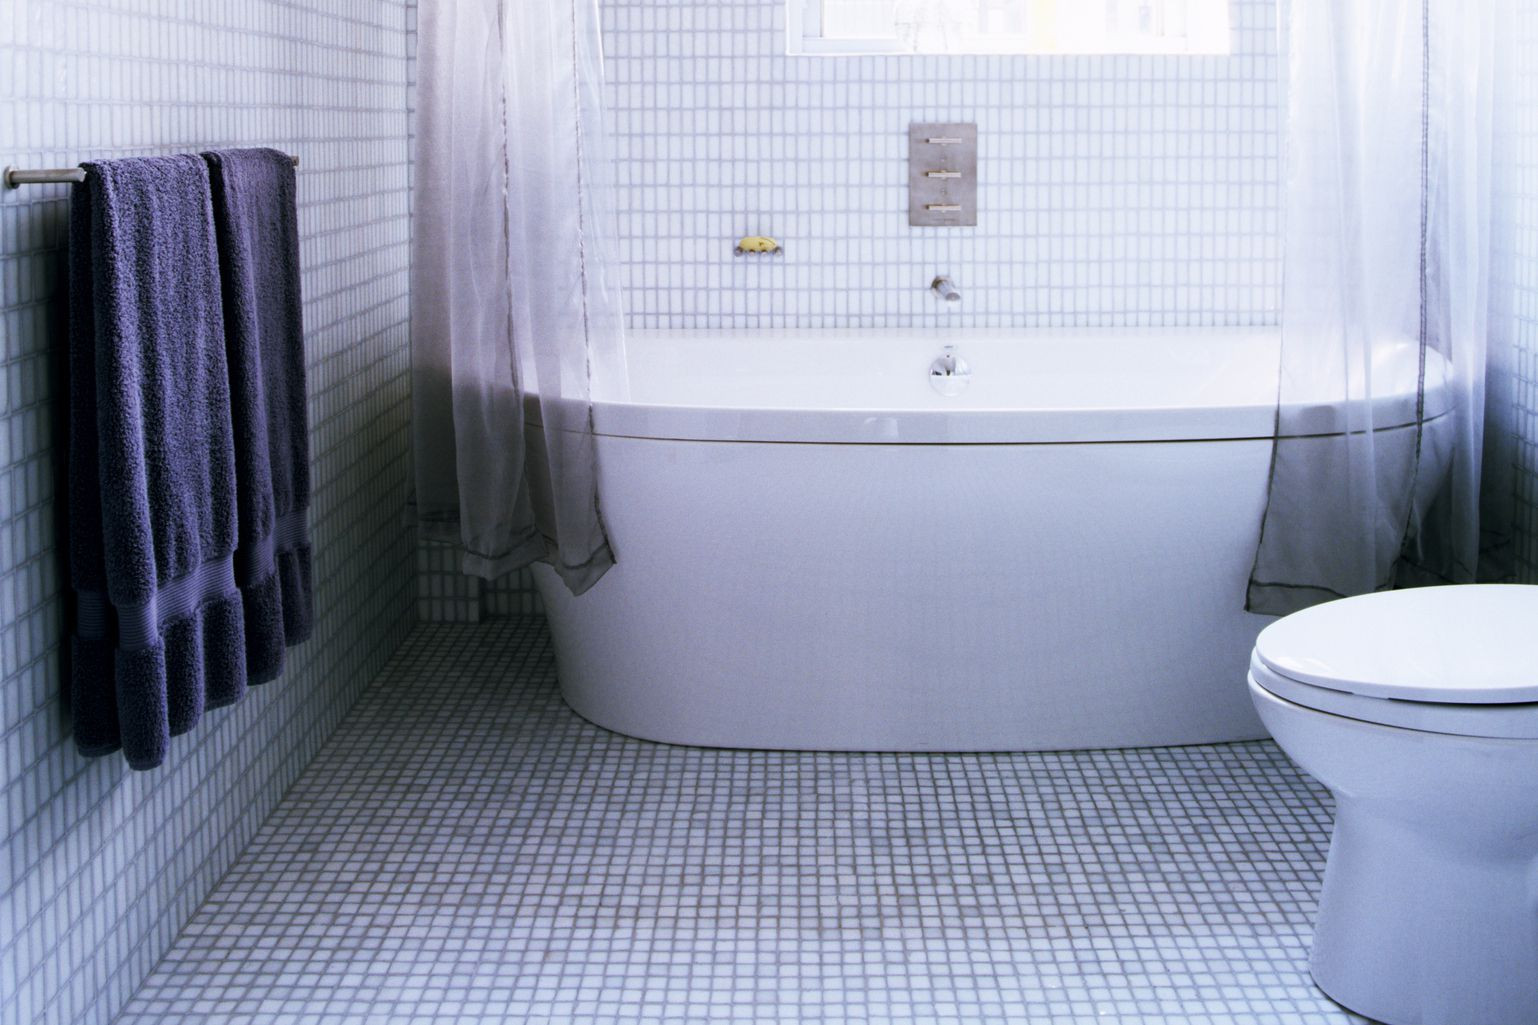 Tiles For Small Bathroom Floor
 The Best Tile Ideas for Small Bathrooms